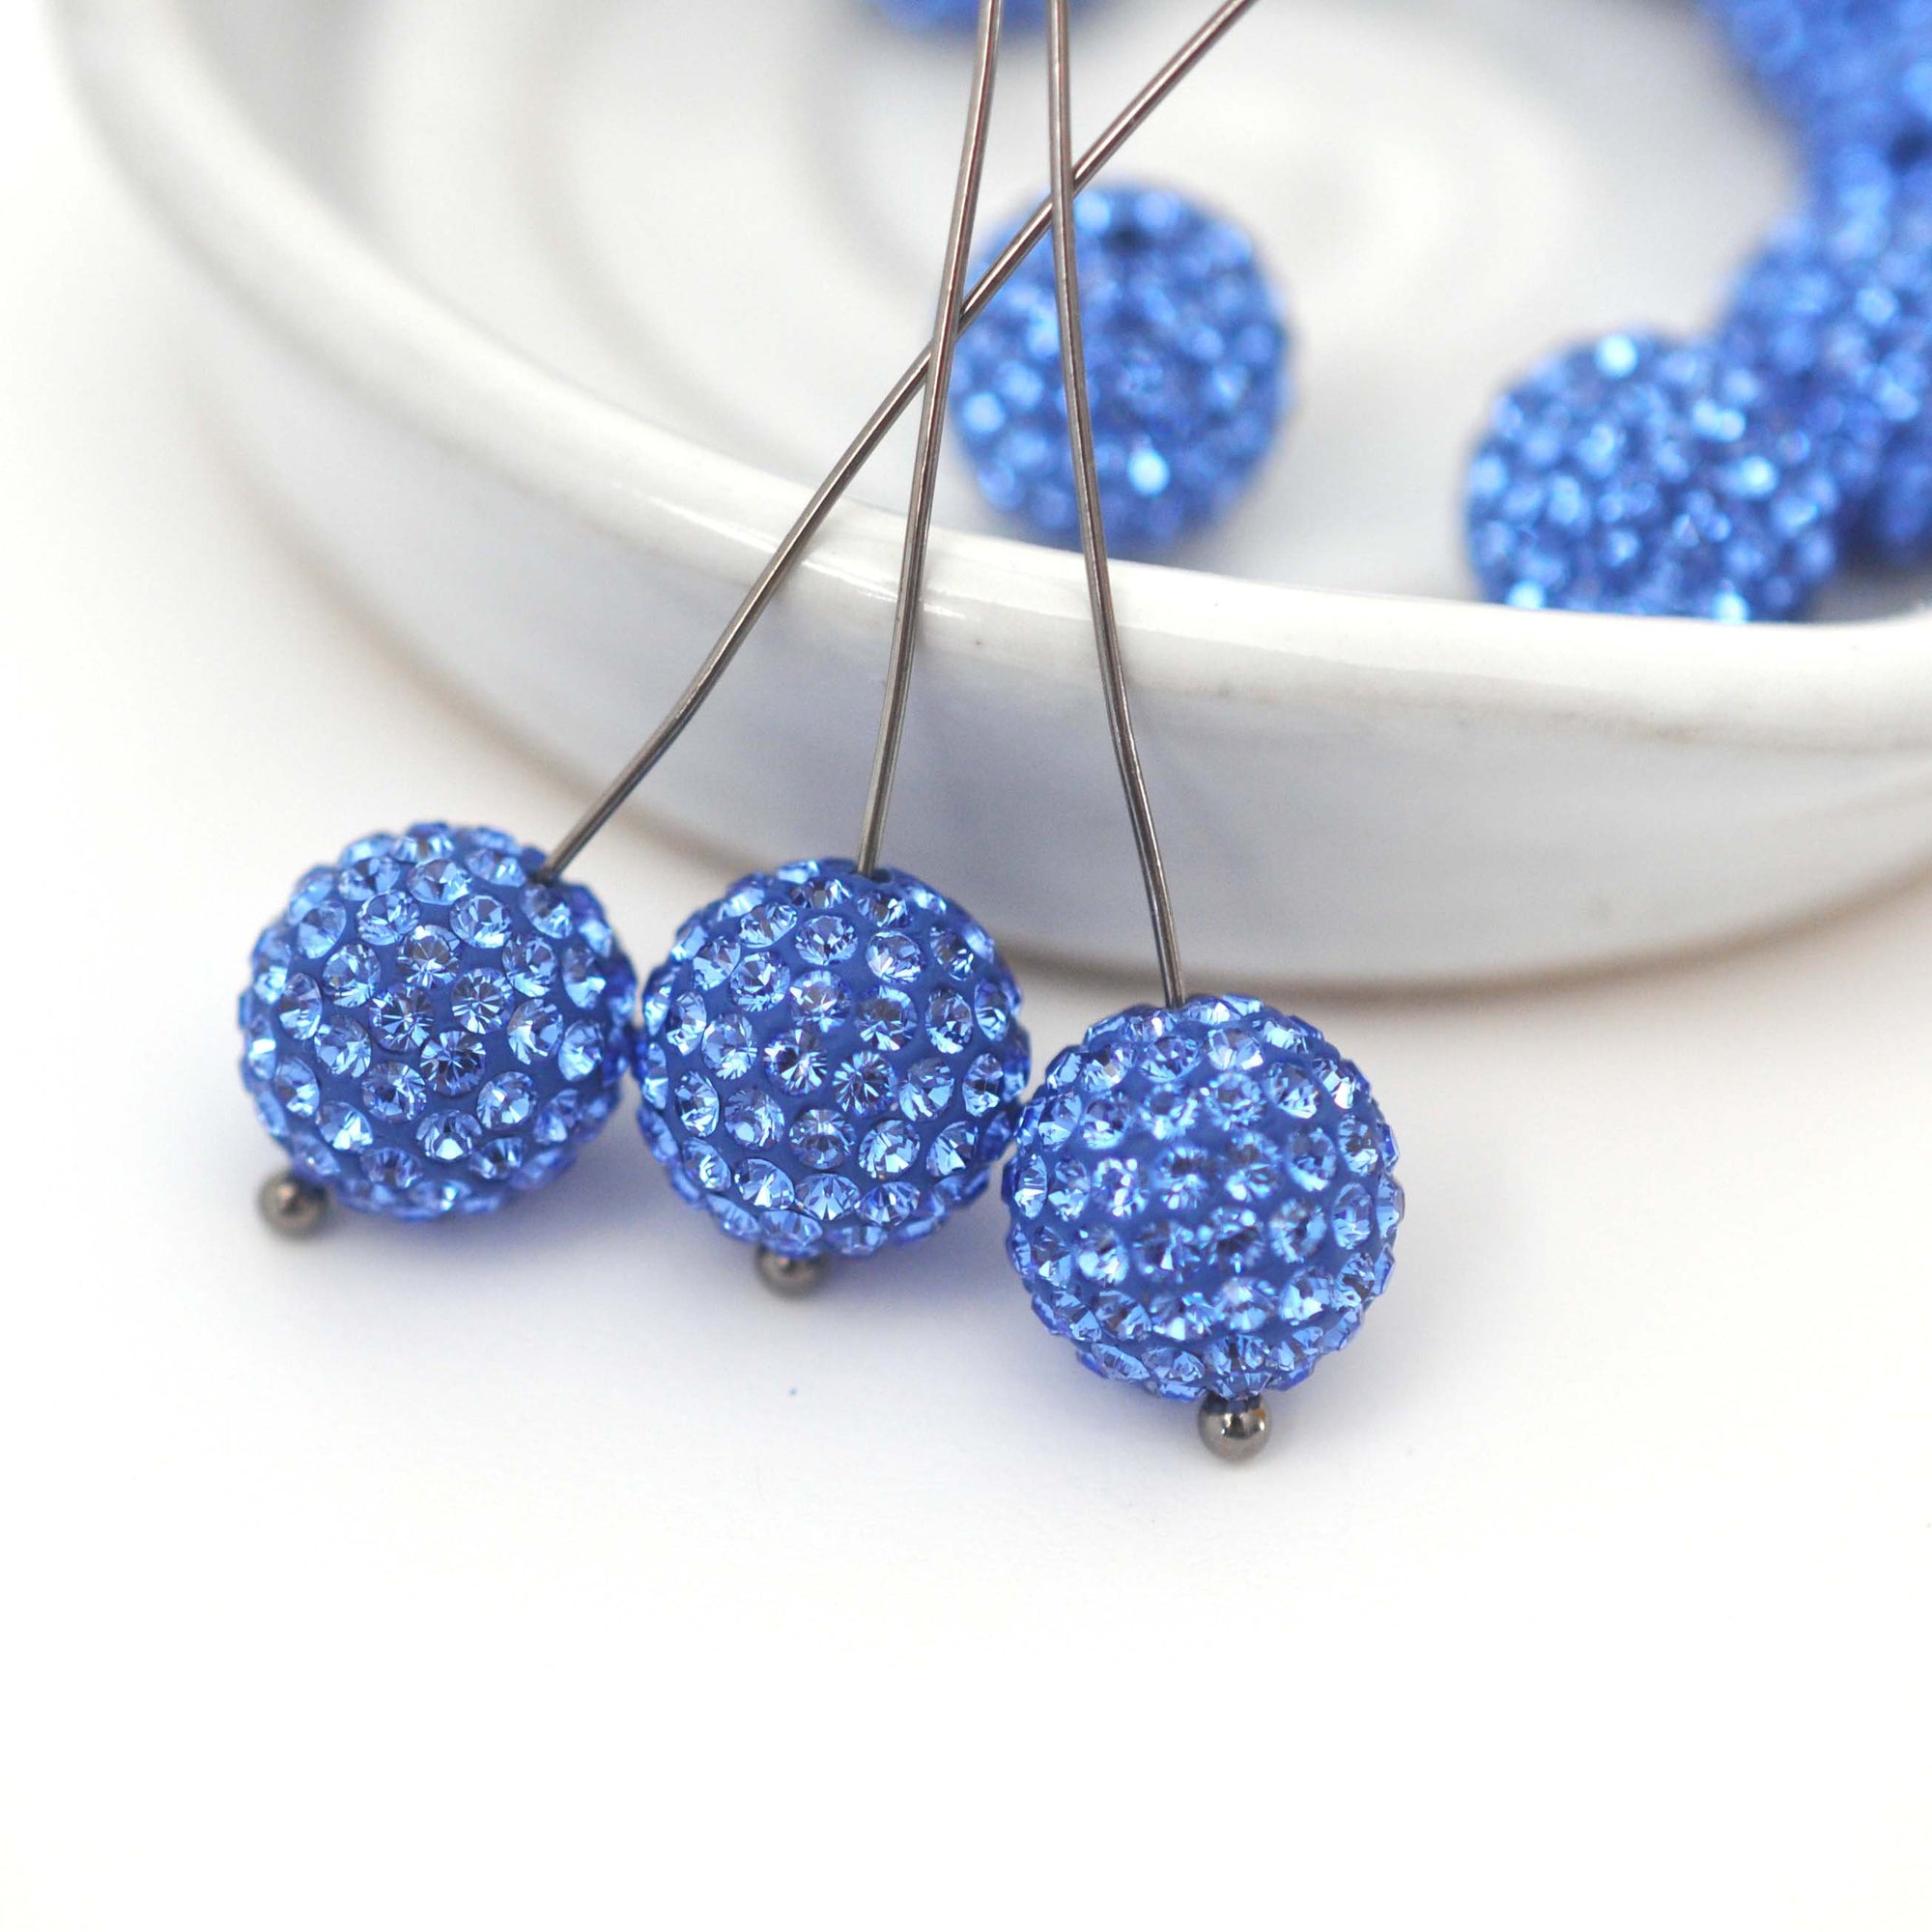 Sapphire Pave Bead Balls 86001 Barton Crystal 10mm - 2 Beads